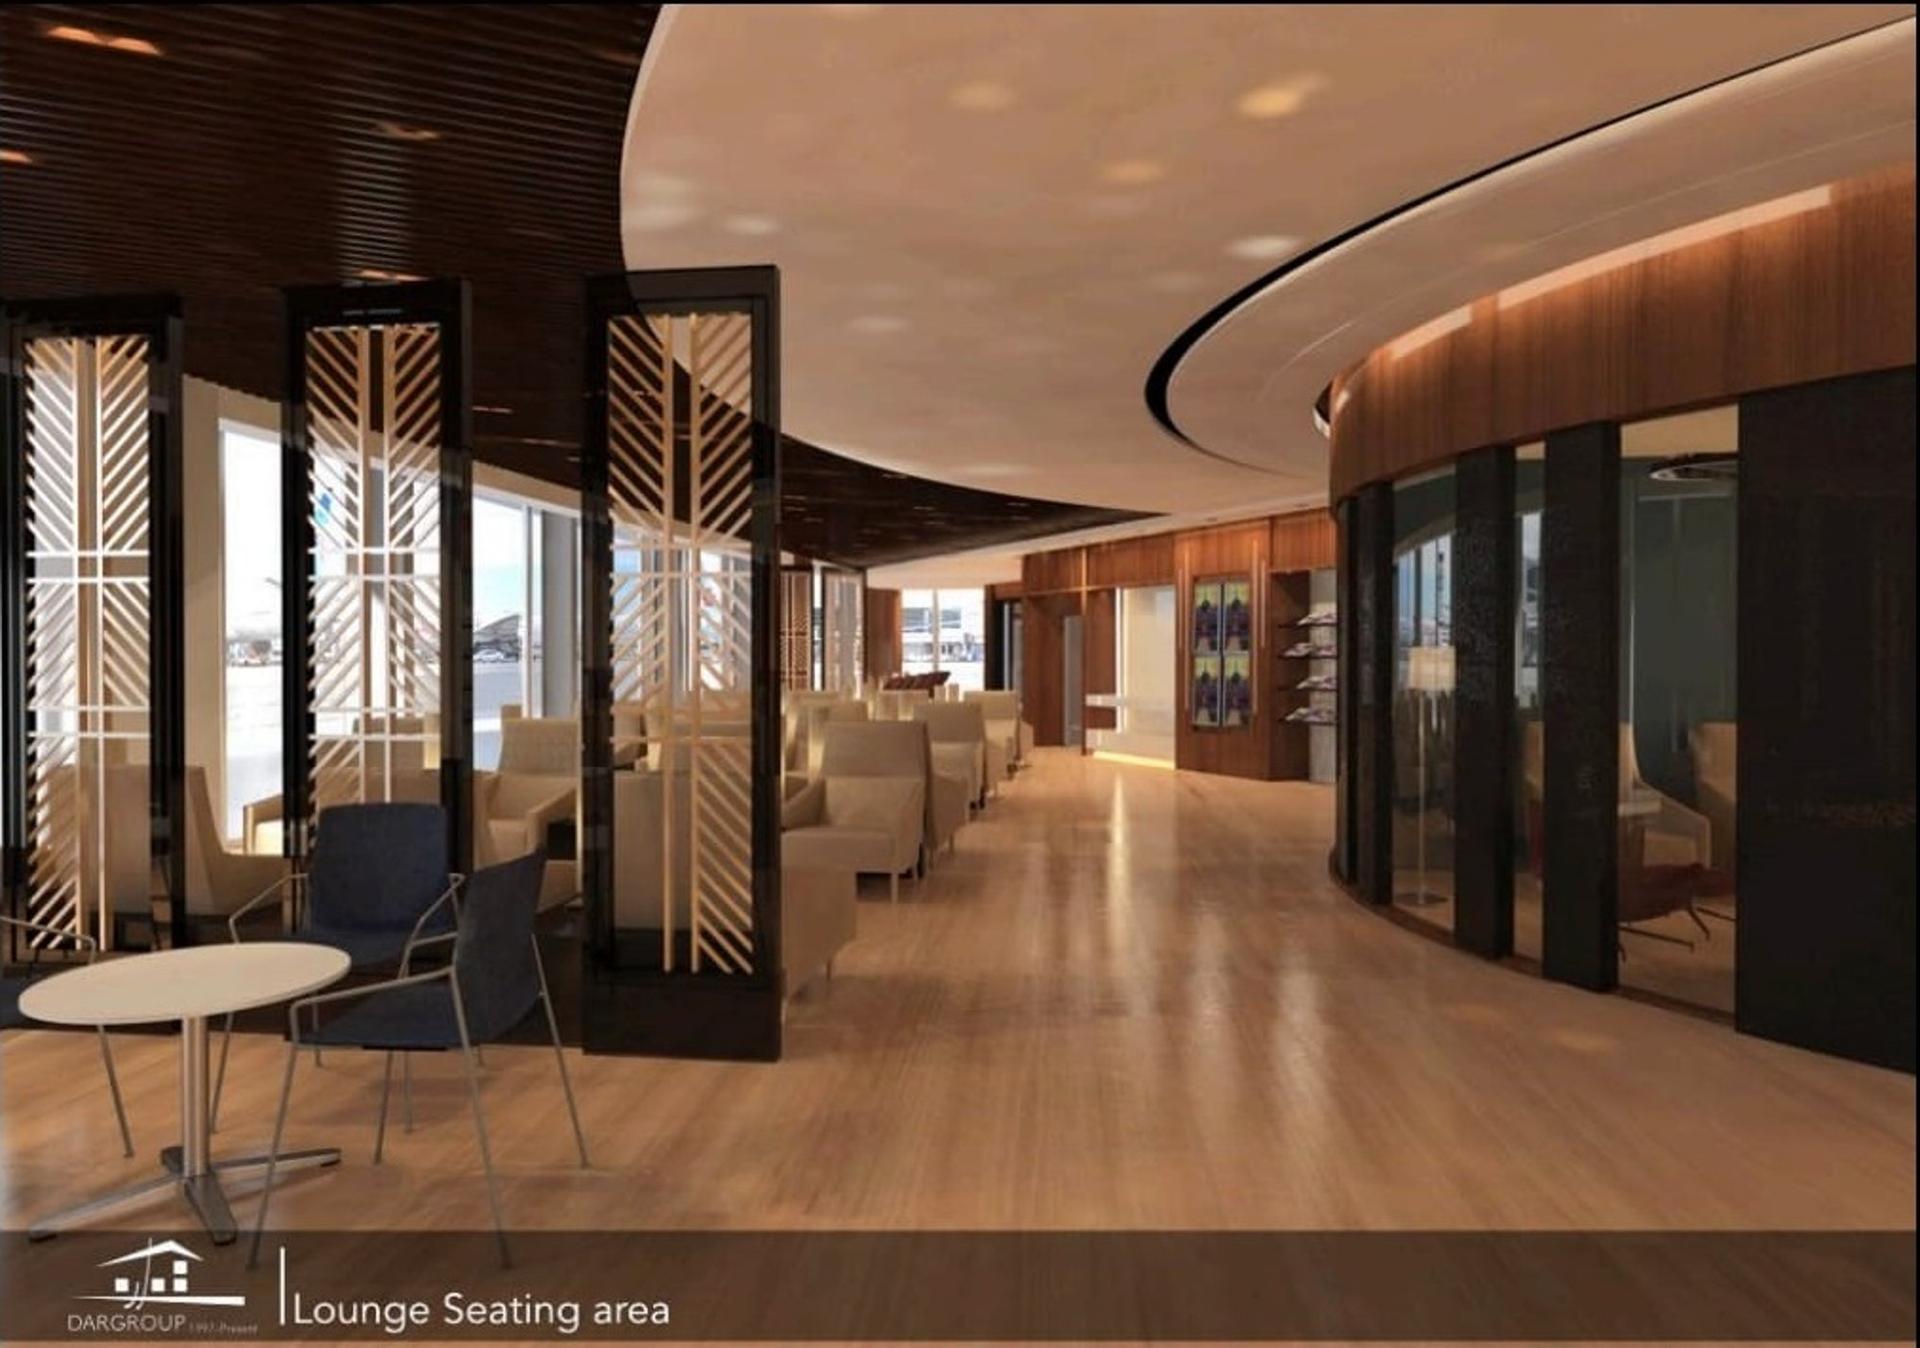 Ahlein Premium Lounge image 3 of 7